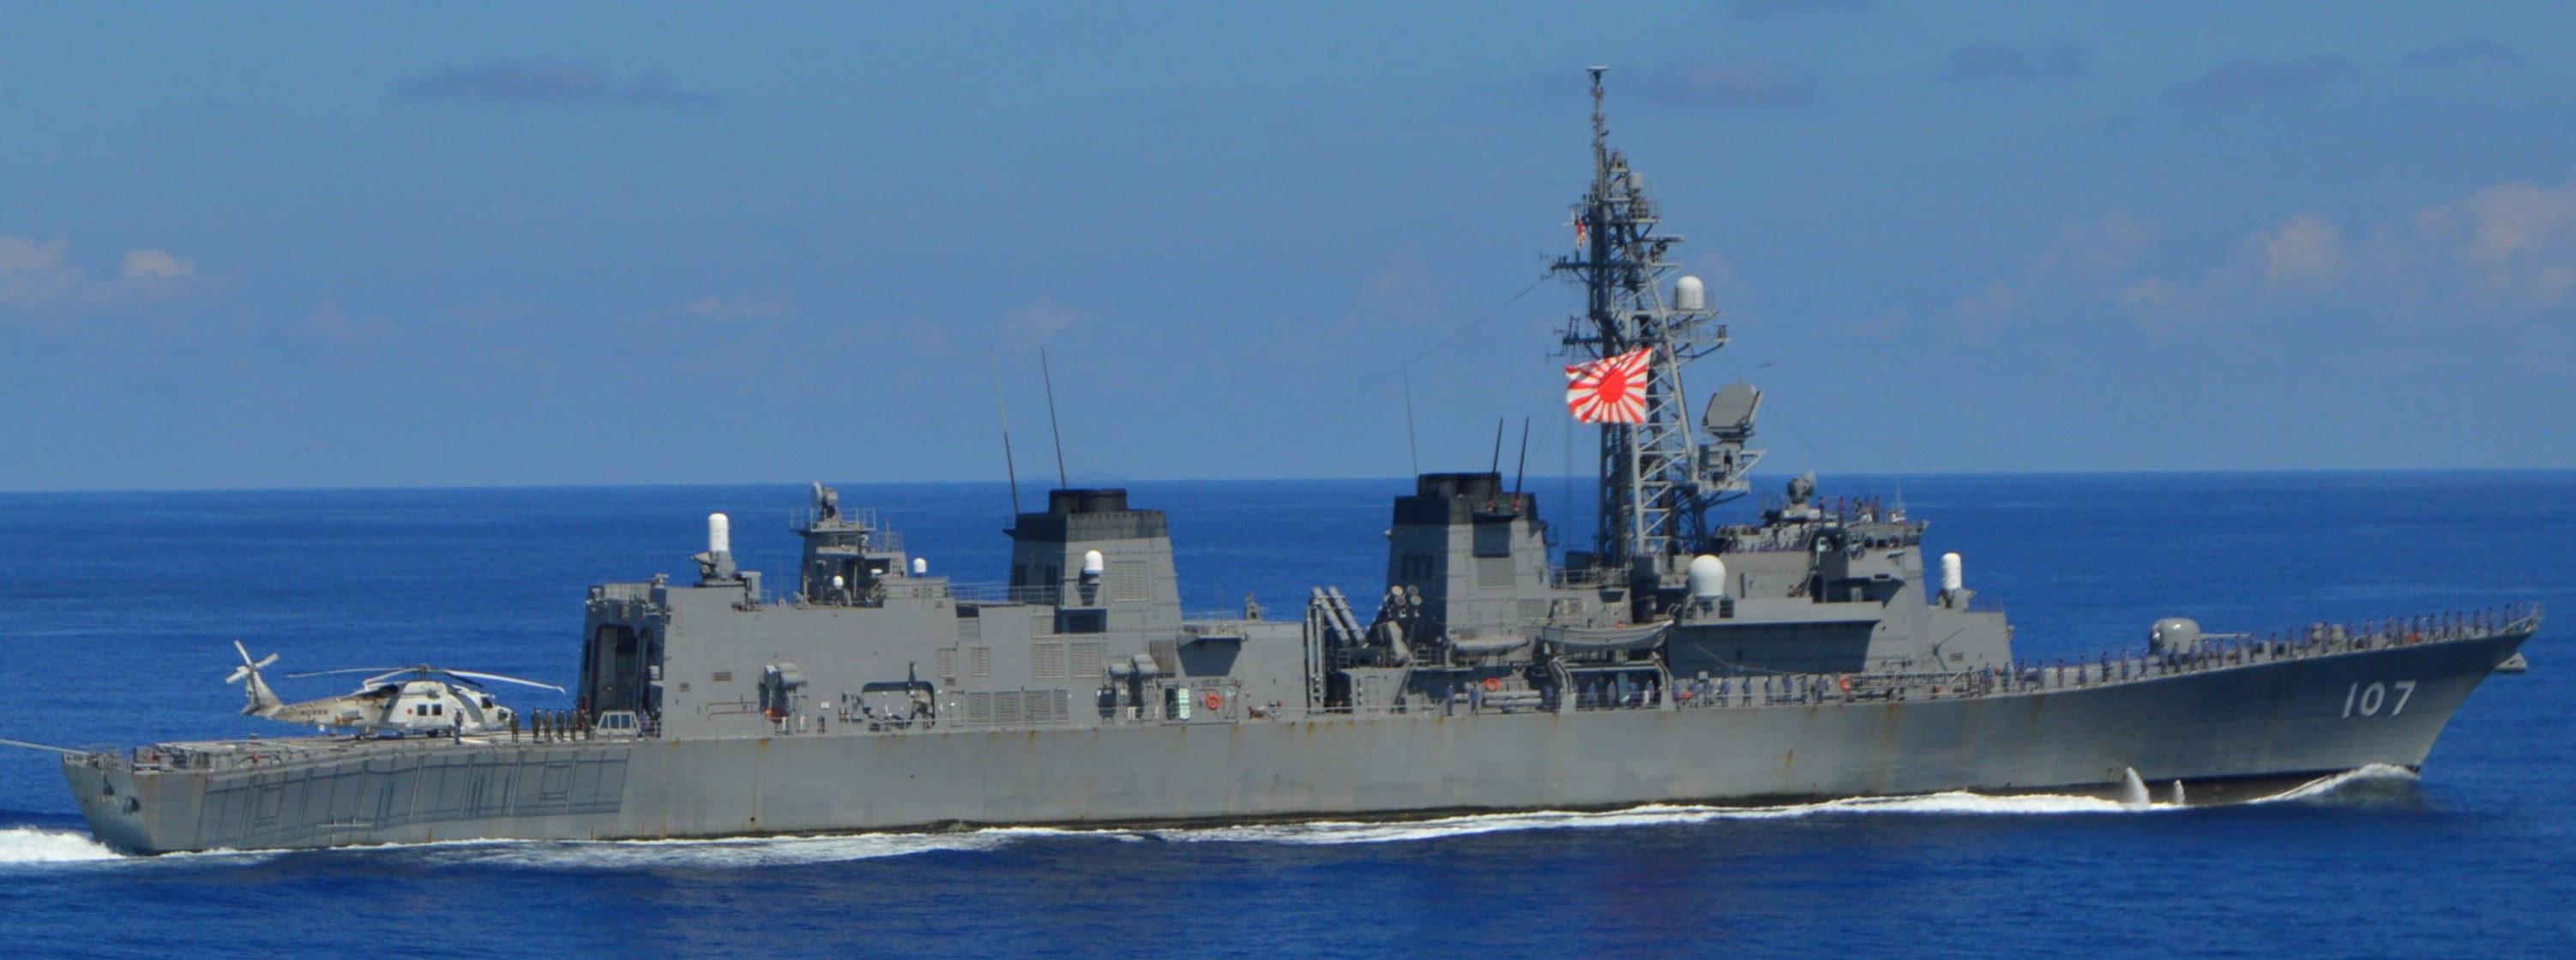 dd-107 js ikazuchi murasame class destroyer japan maritime self defense force jmsdf 22